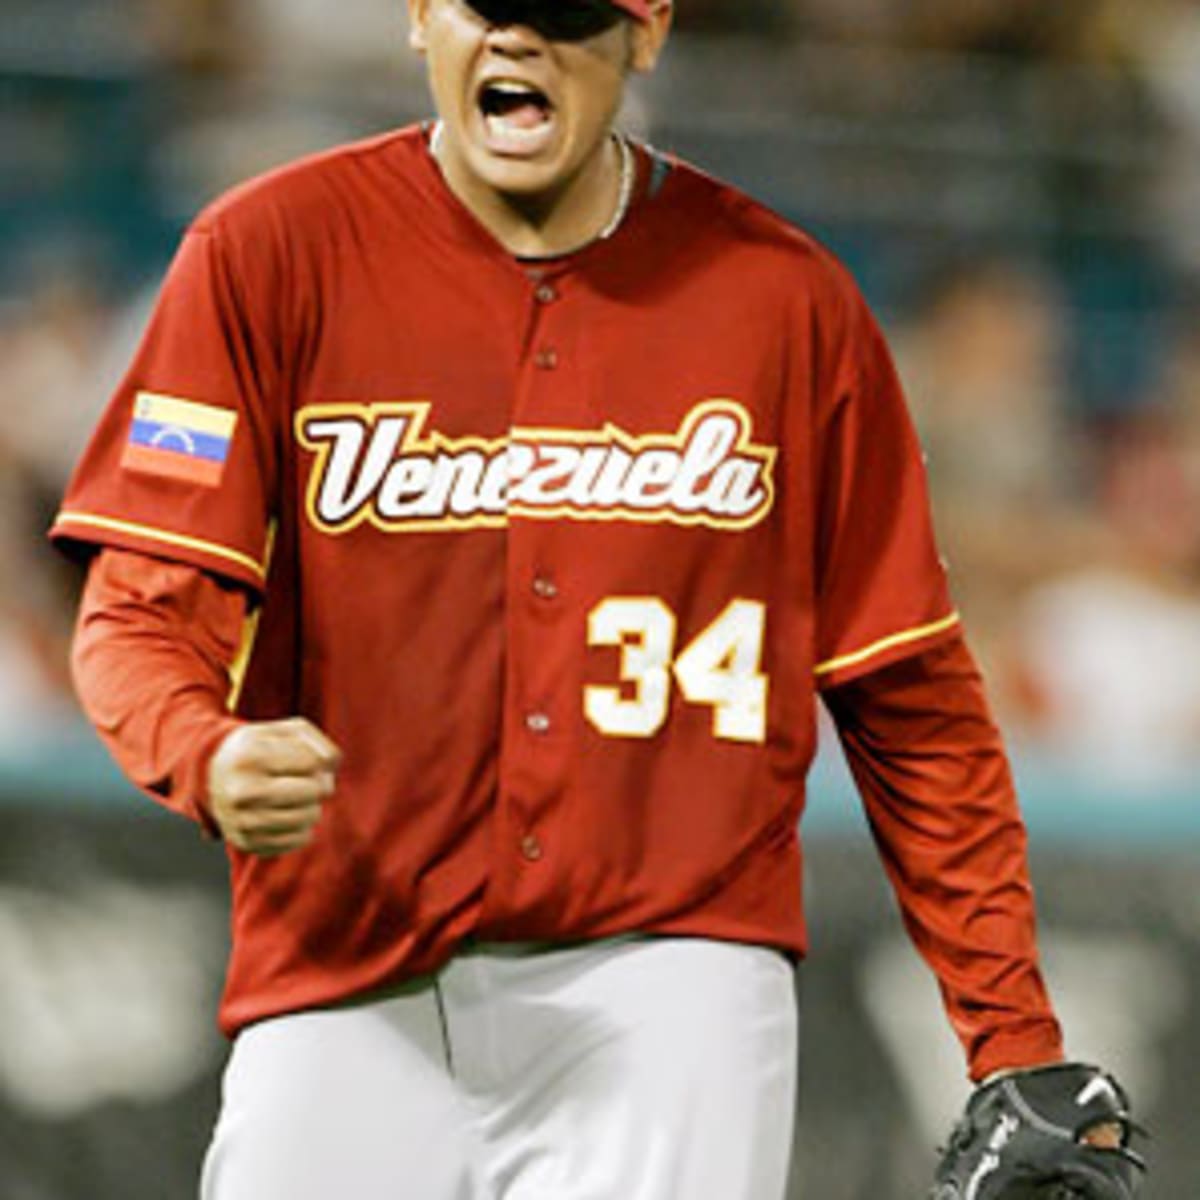 2009 World Baseball Classic Jersey - Venezuela Jersey, Luis Sojo